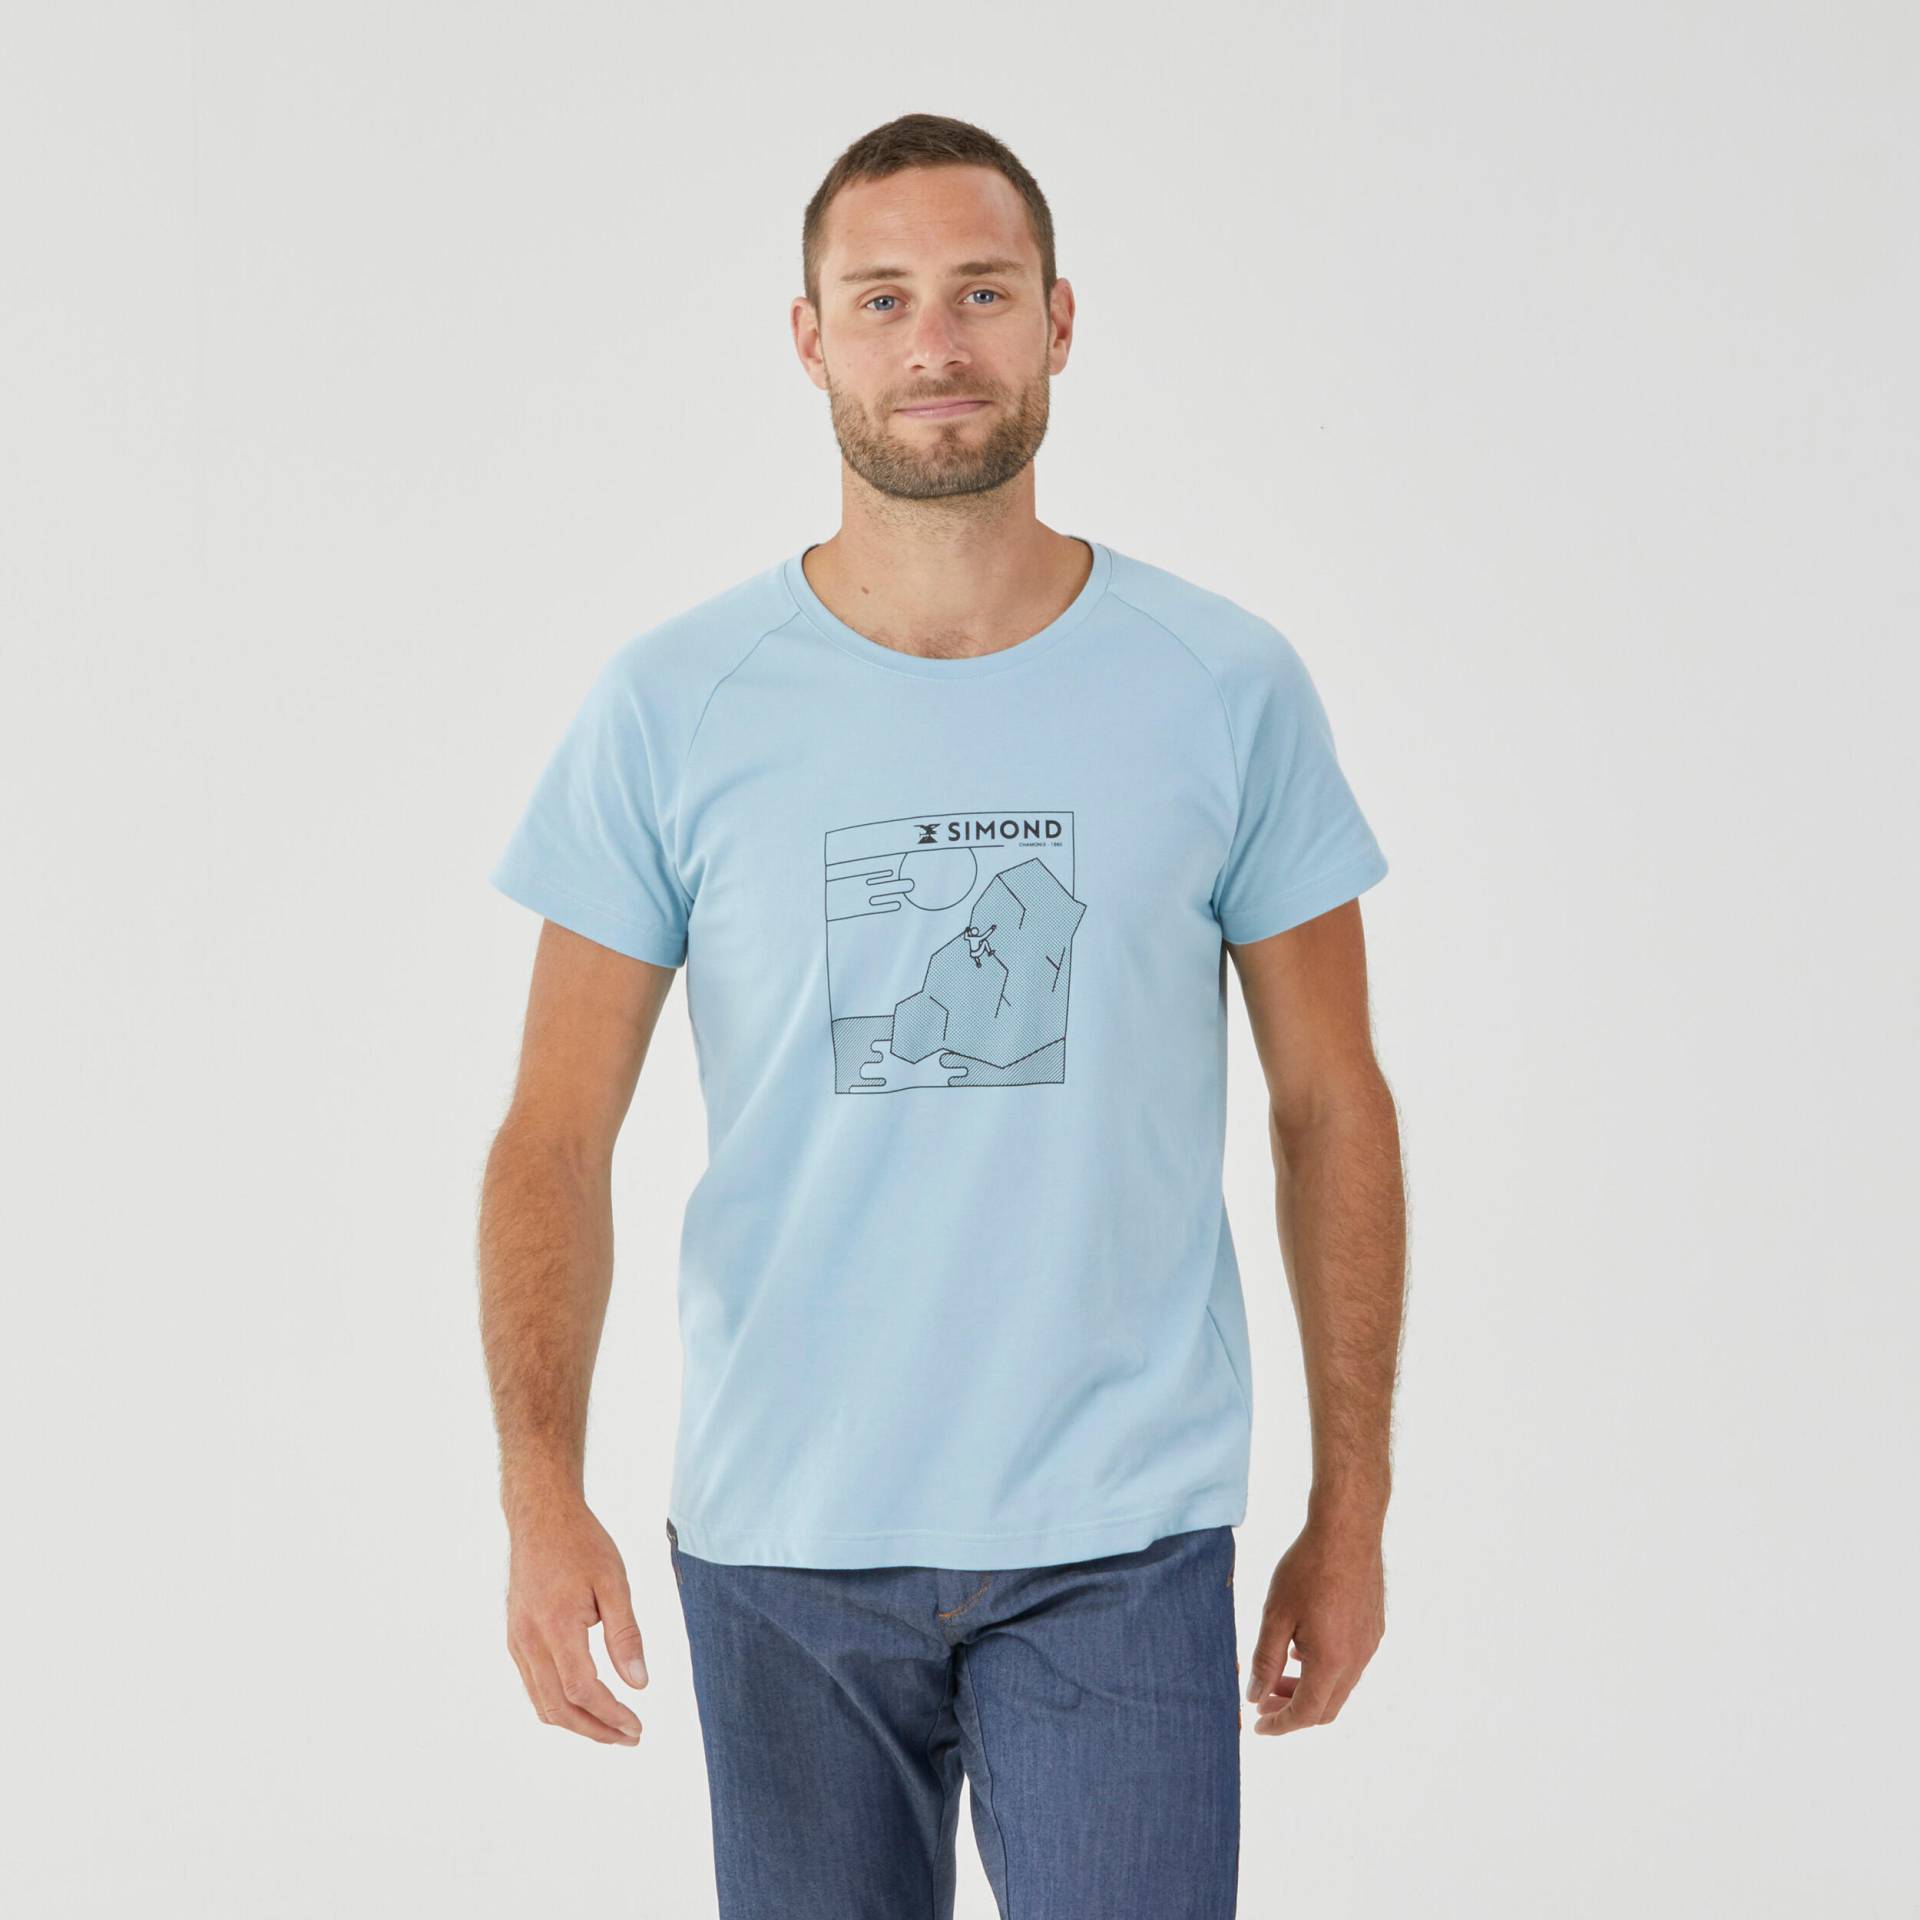 Kletter-T-Shirt Herren - Vertika von SIMOND